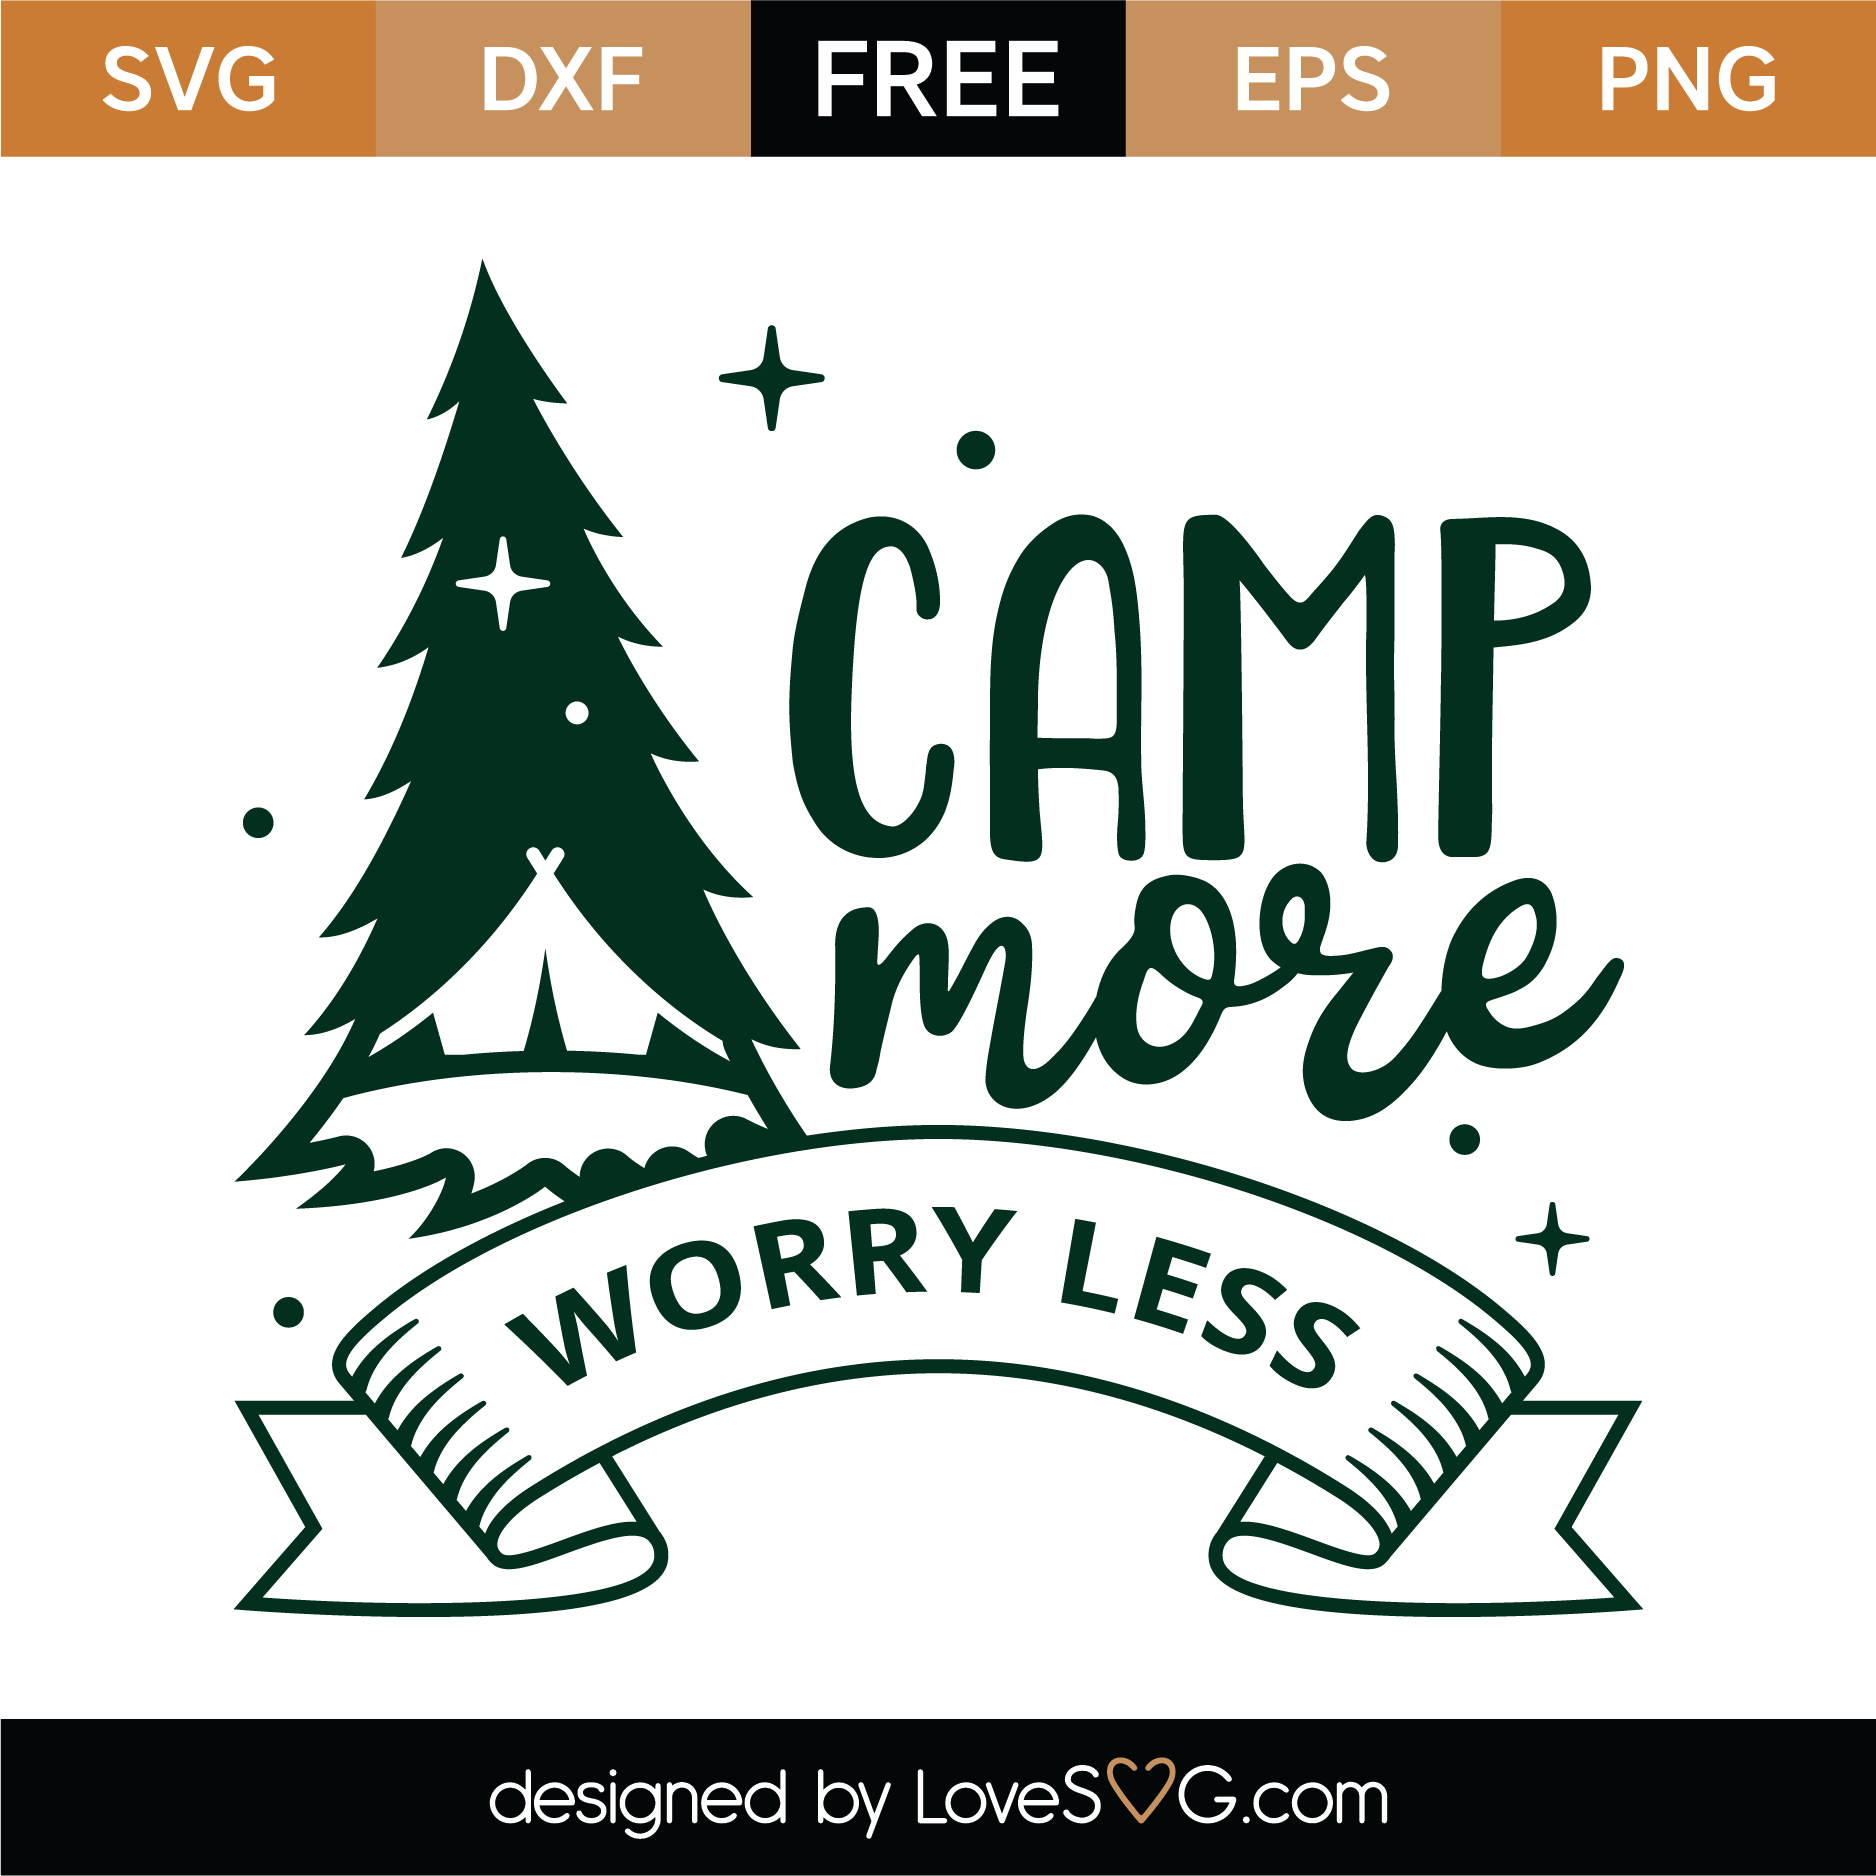 Download Free Camp More Worry Less SVG Cut File | Lovesvg.com